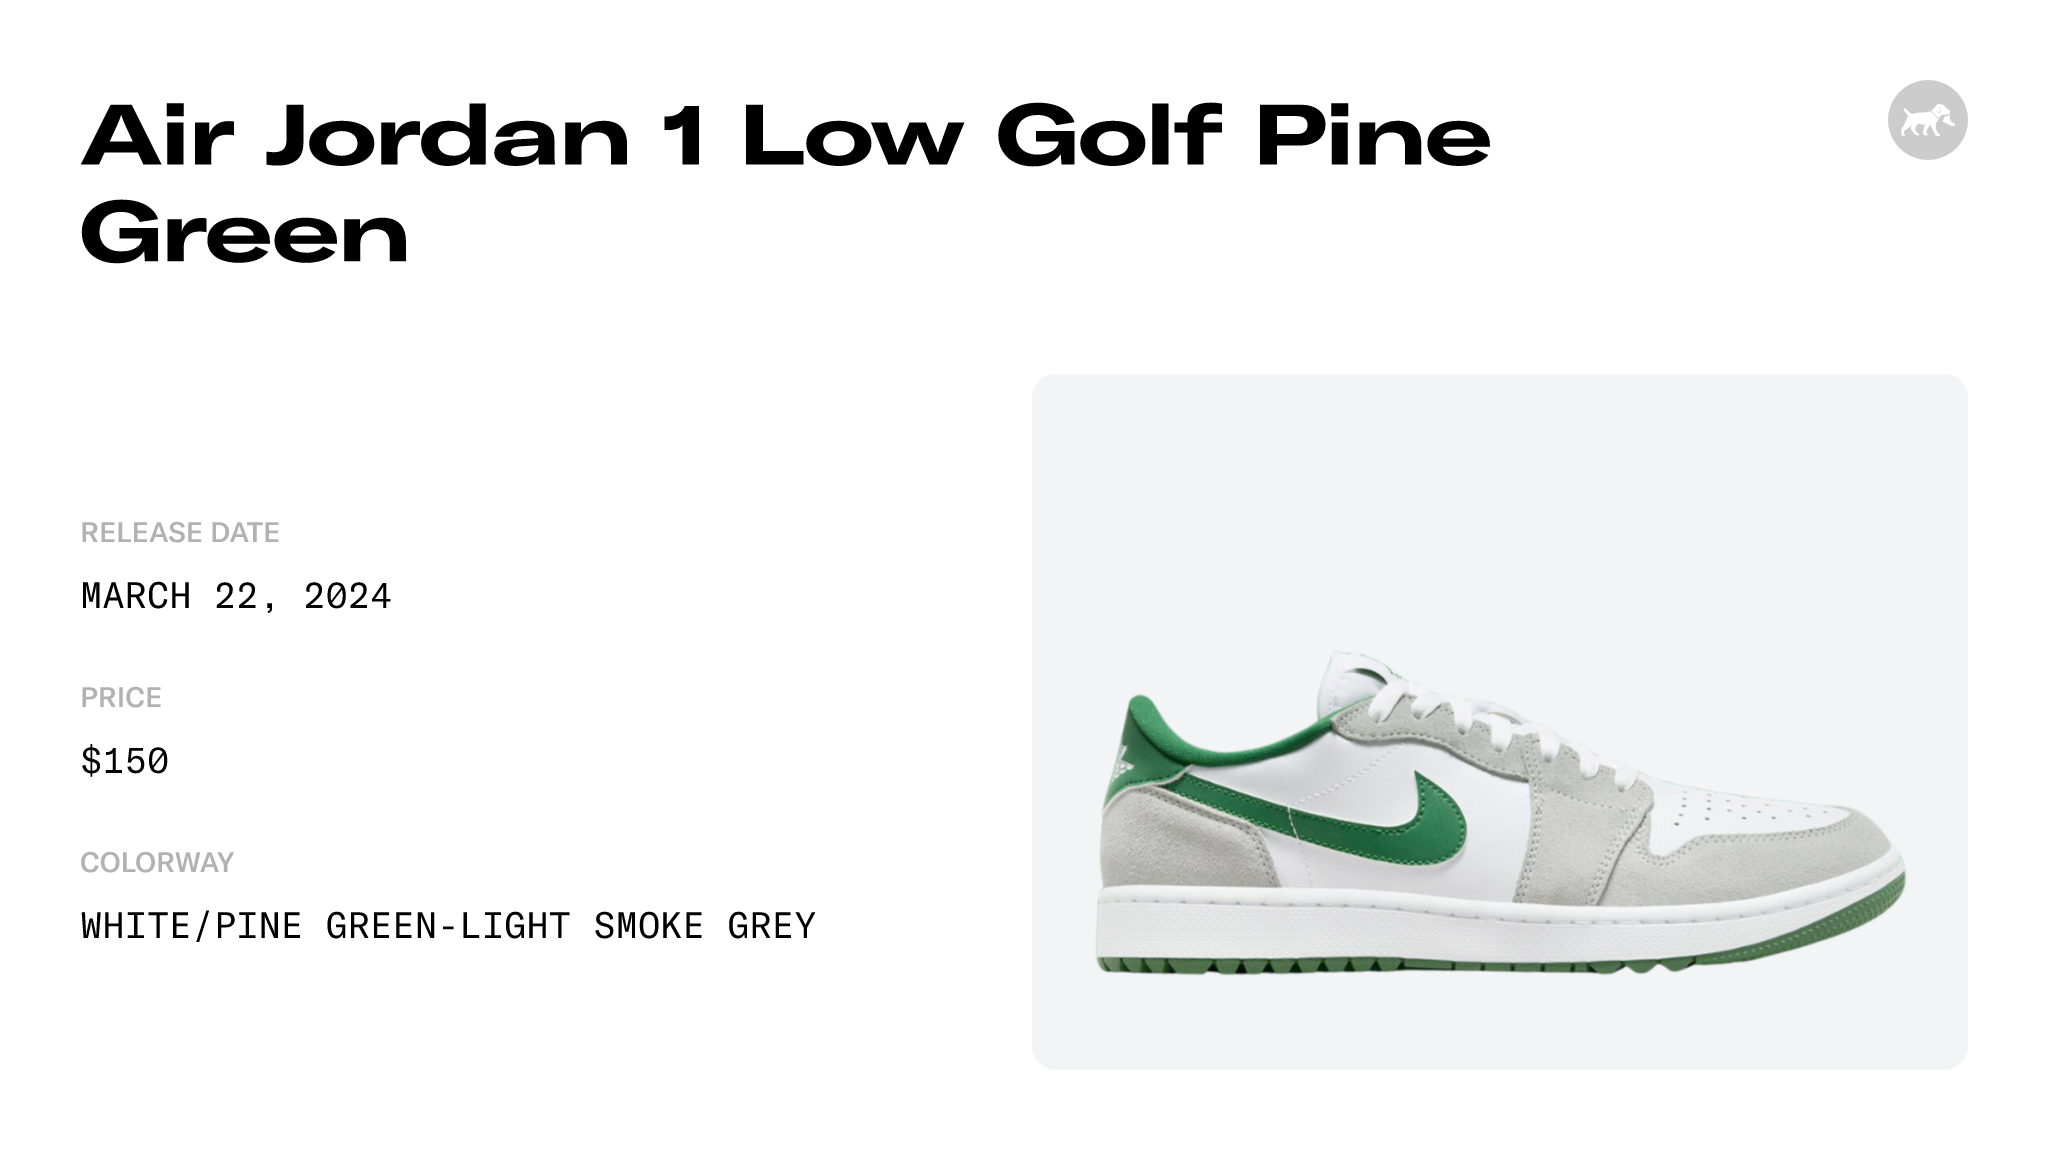 Air Jordan 1 Low Golf Pine Green - DD9315-112 Raffles and Release Date